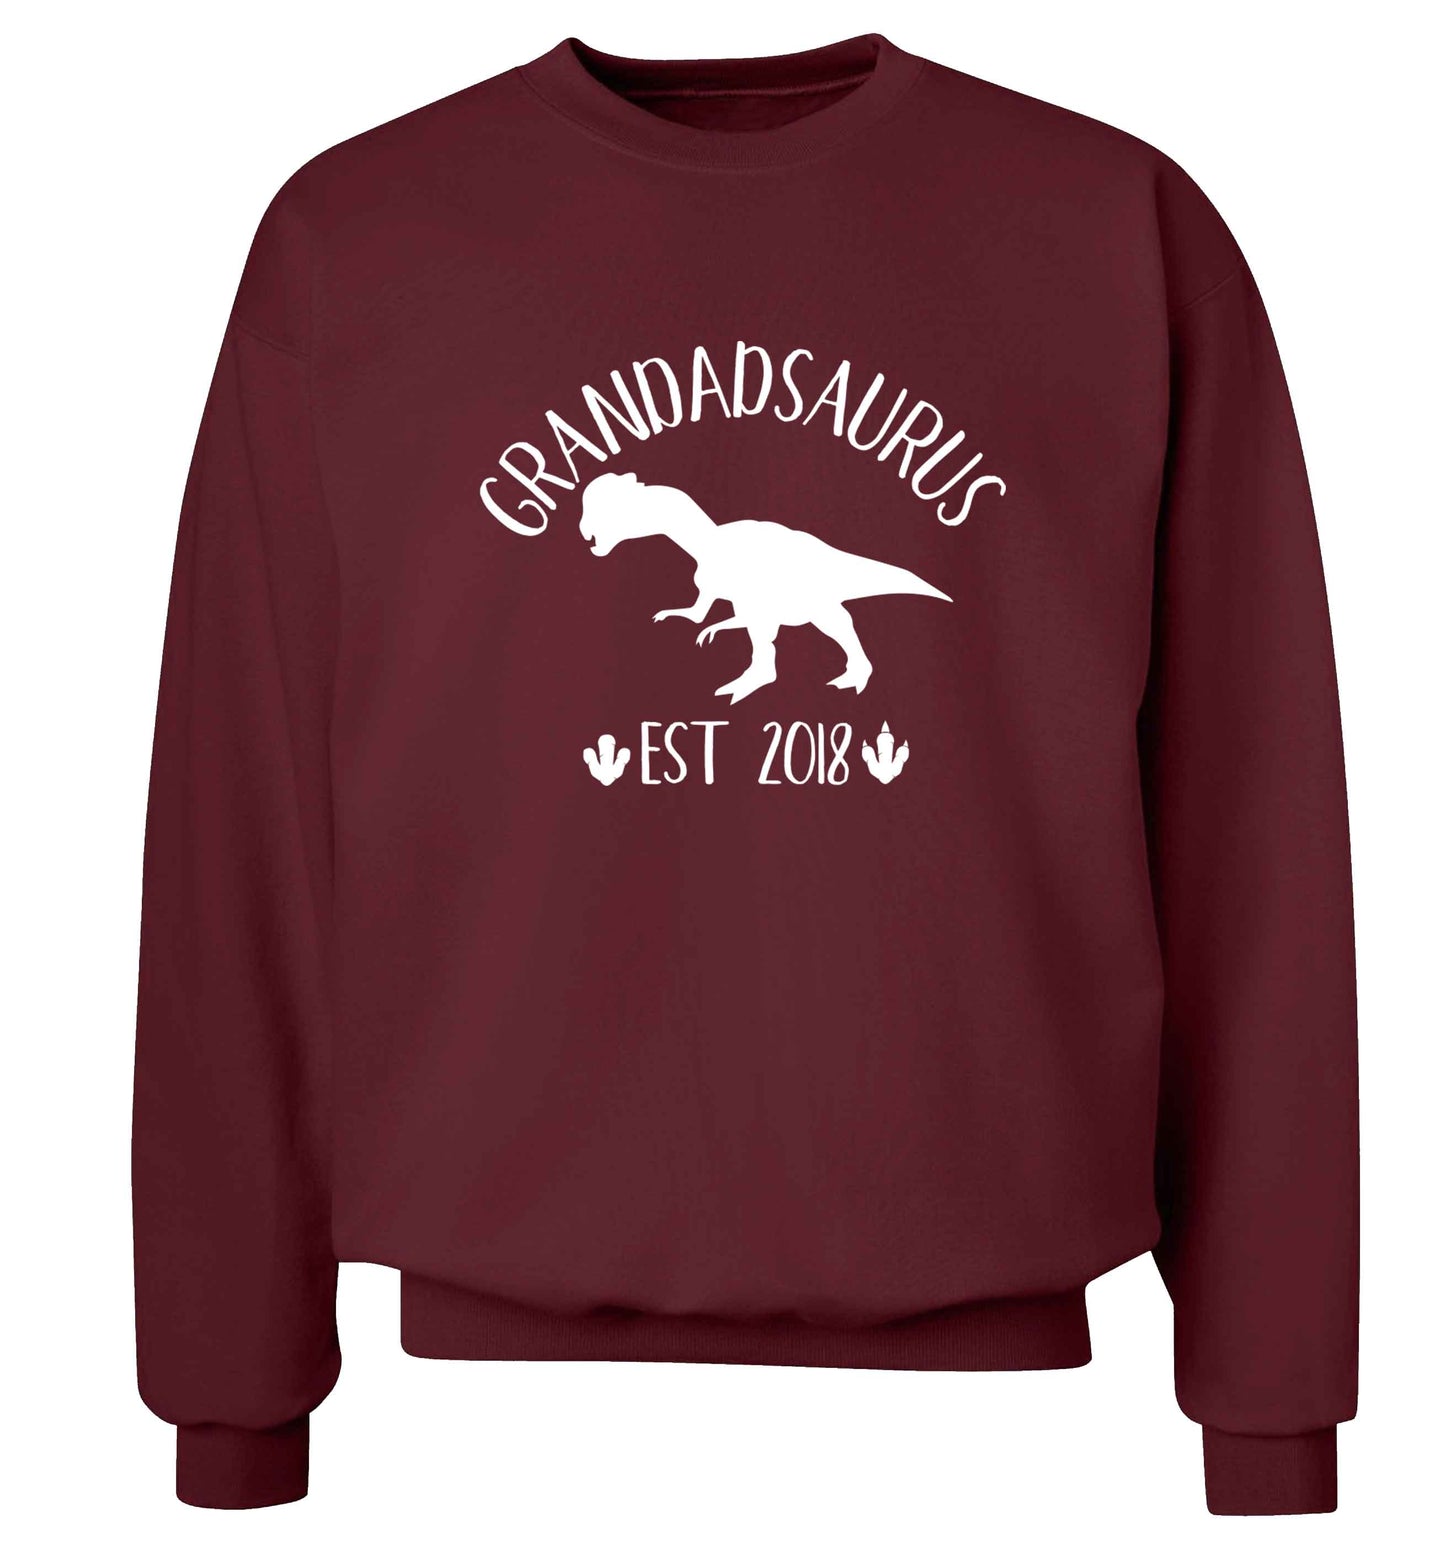 Personalised grandadsaurus since (custom date) Adult's unisex maroon Sweater 2XL